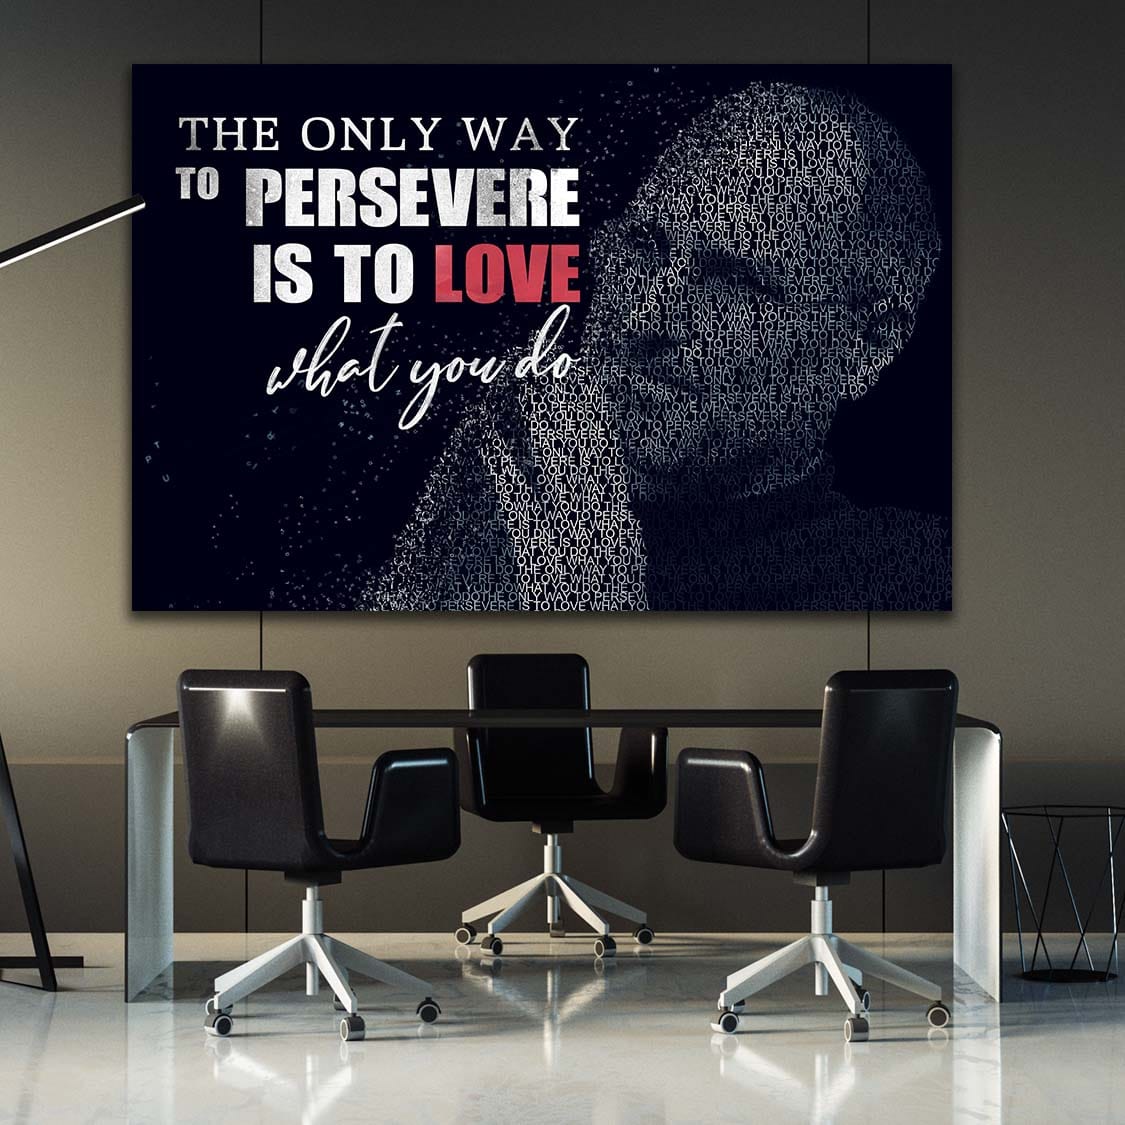 Love what you do - Steve Jobs Wall Art | Inspirational Wall Art Motivational Wall Art Quotes Office Art | ImpaktMaker Exclusive Canvas Art Landscape